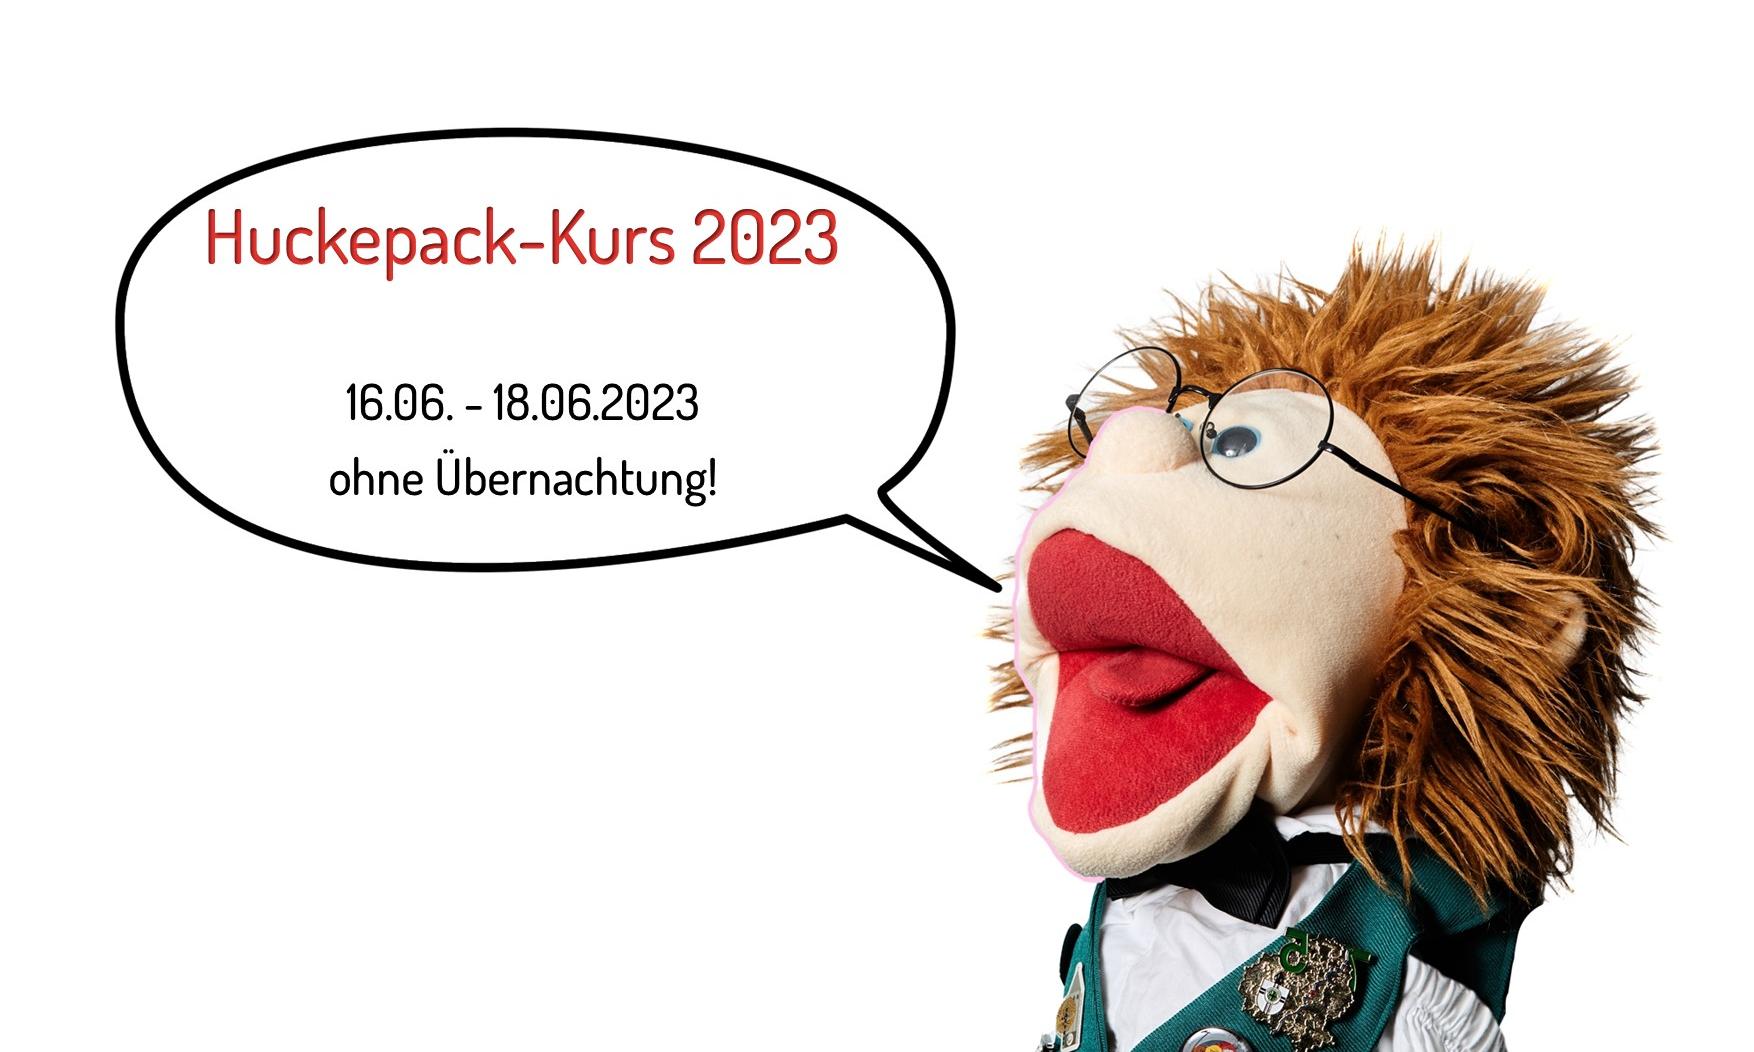 HuckePack-Kurs 2023